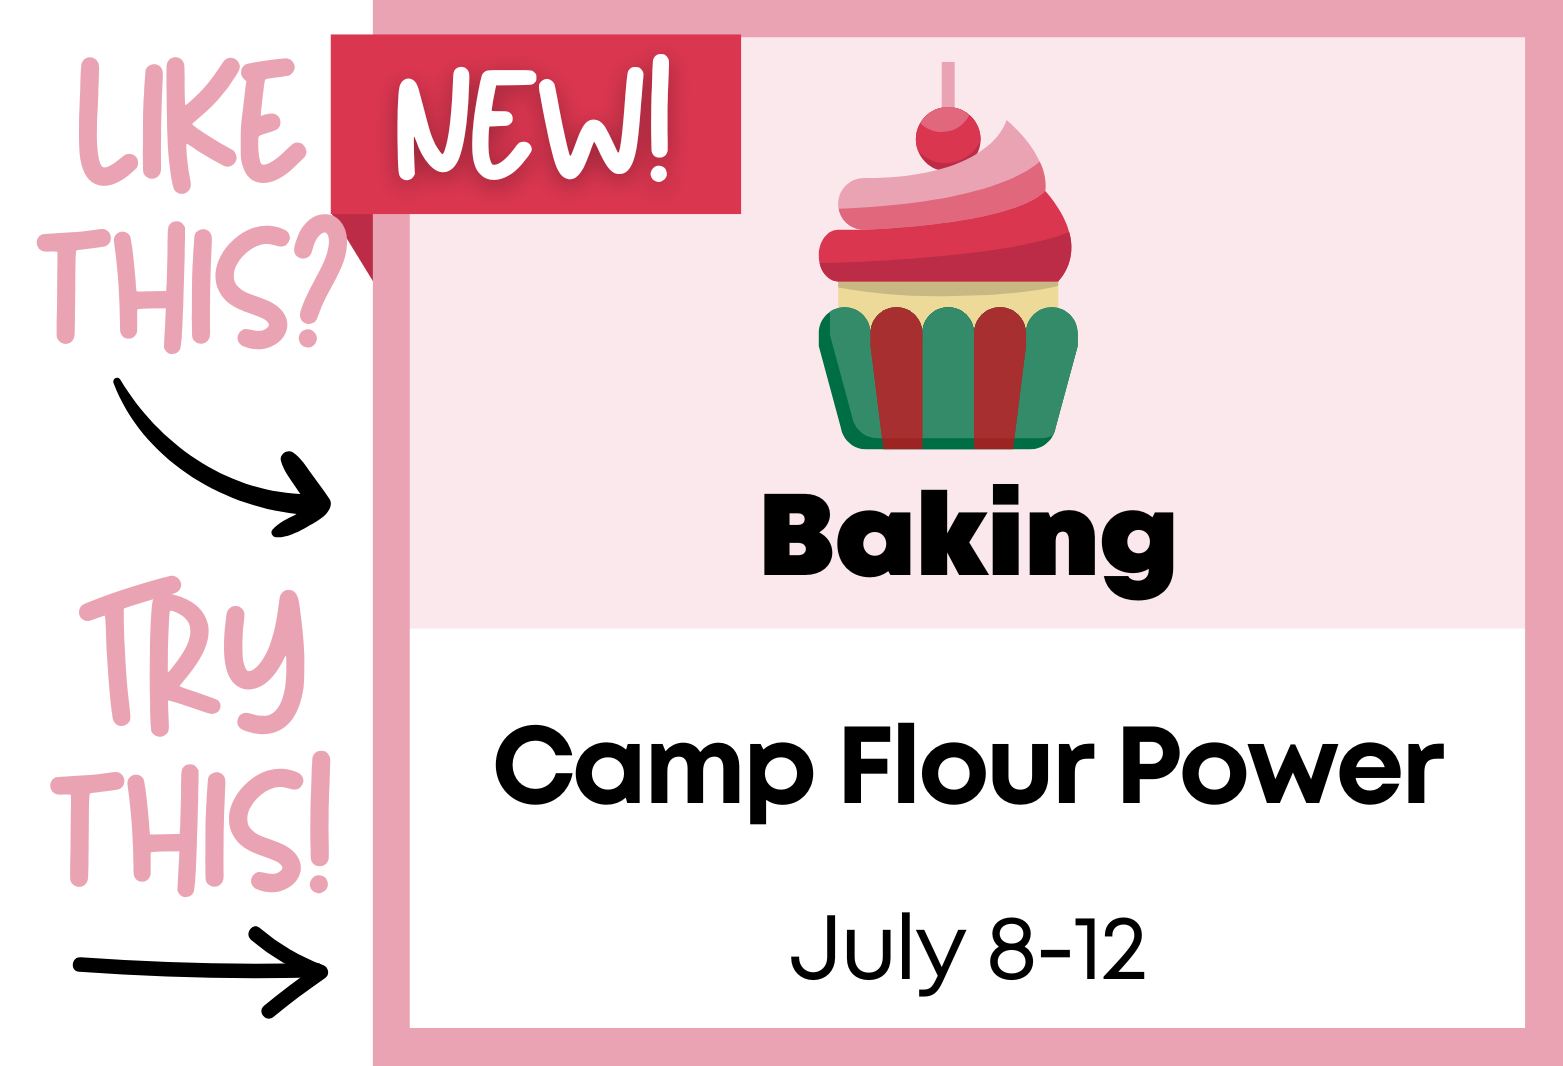 Camp Flour Power, July 8-12